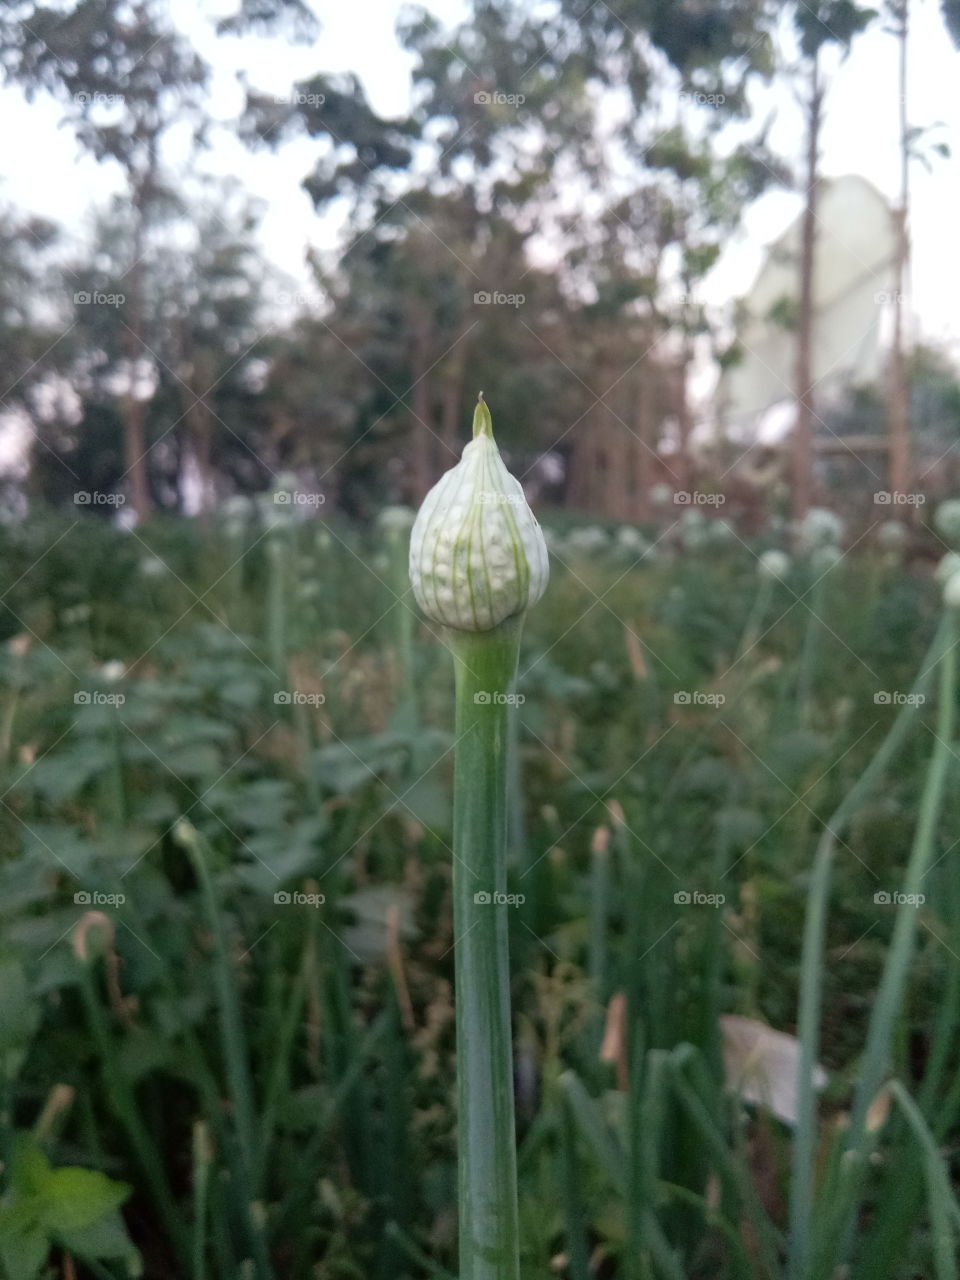 onion flower first stage